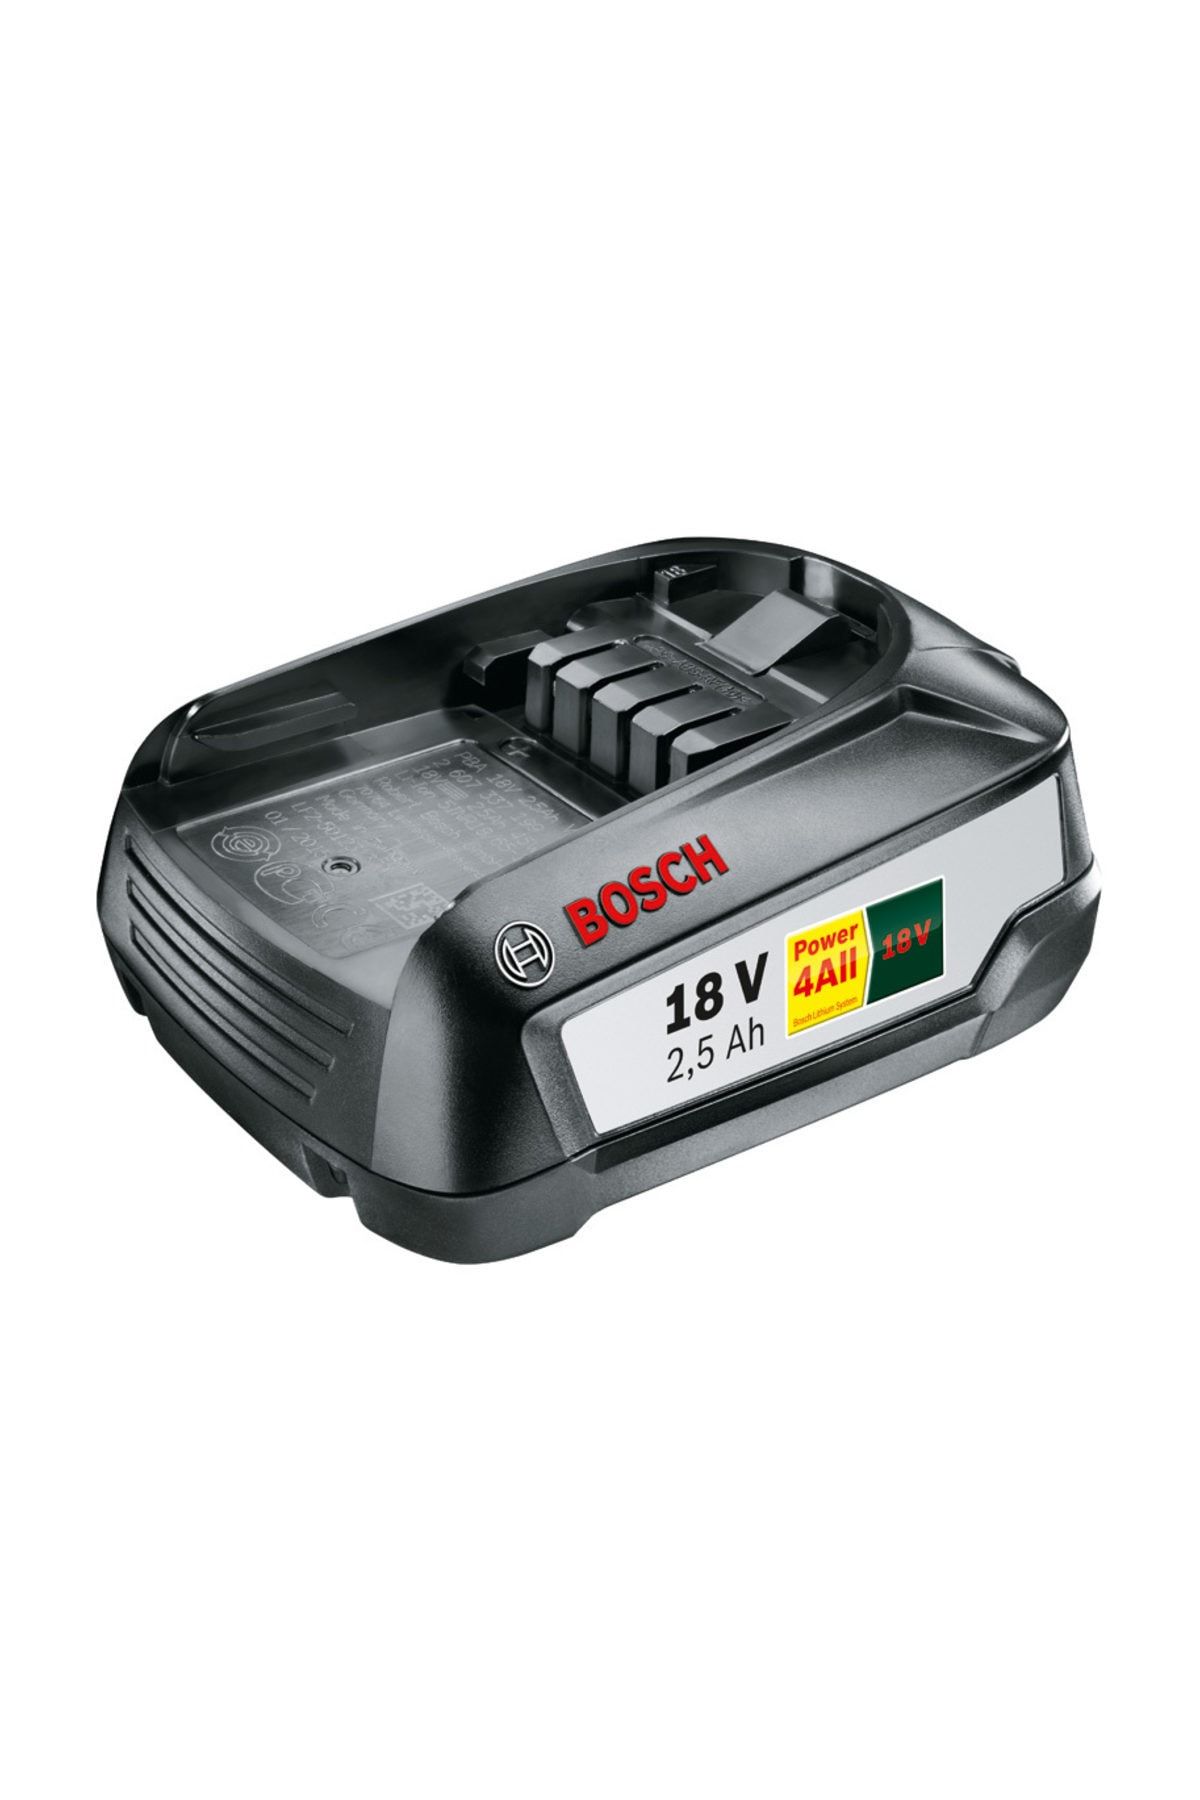 Bosch 18 V 2,5 Ah Akü (Pba W-B) - 1600A005B0